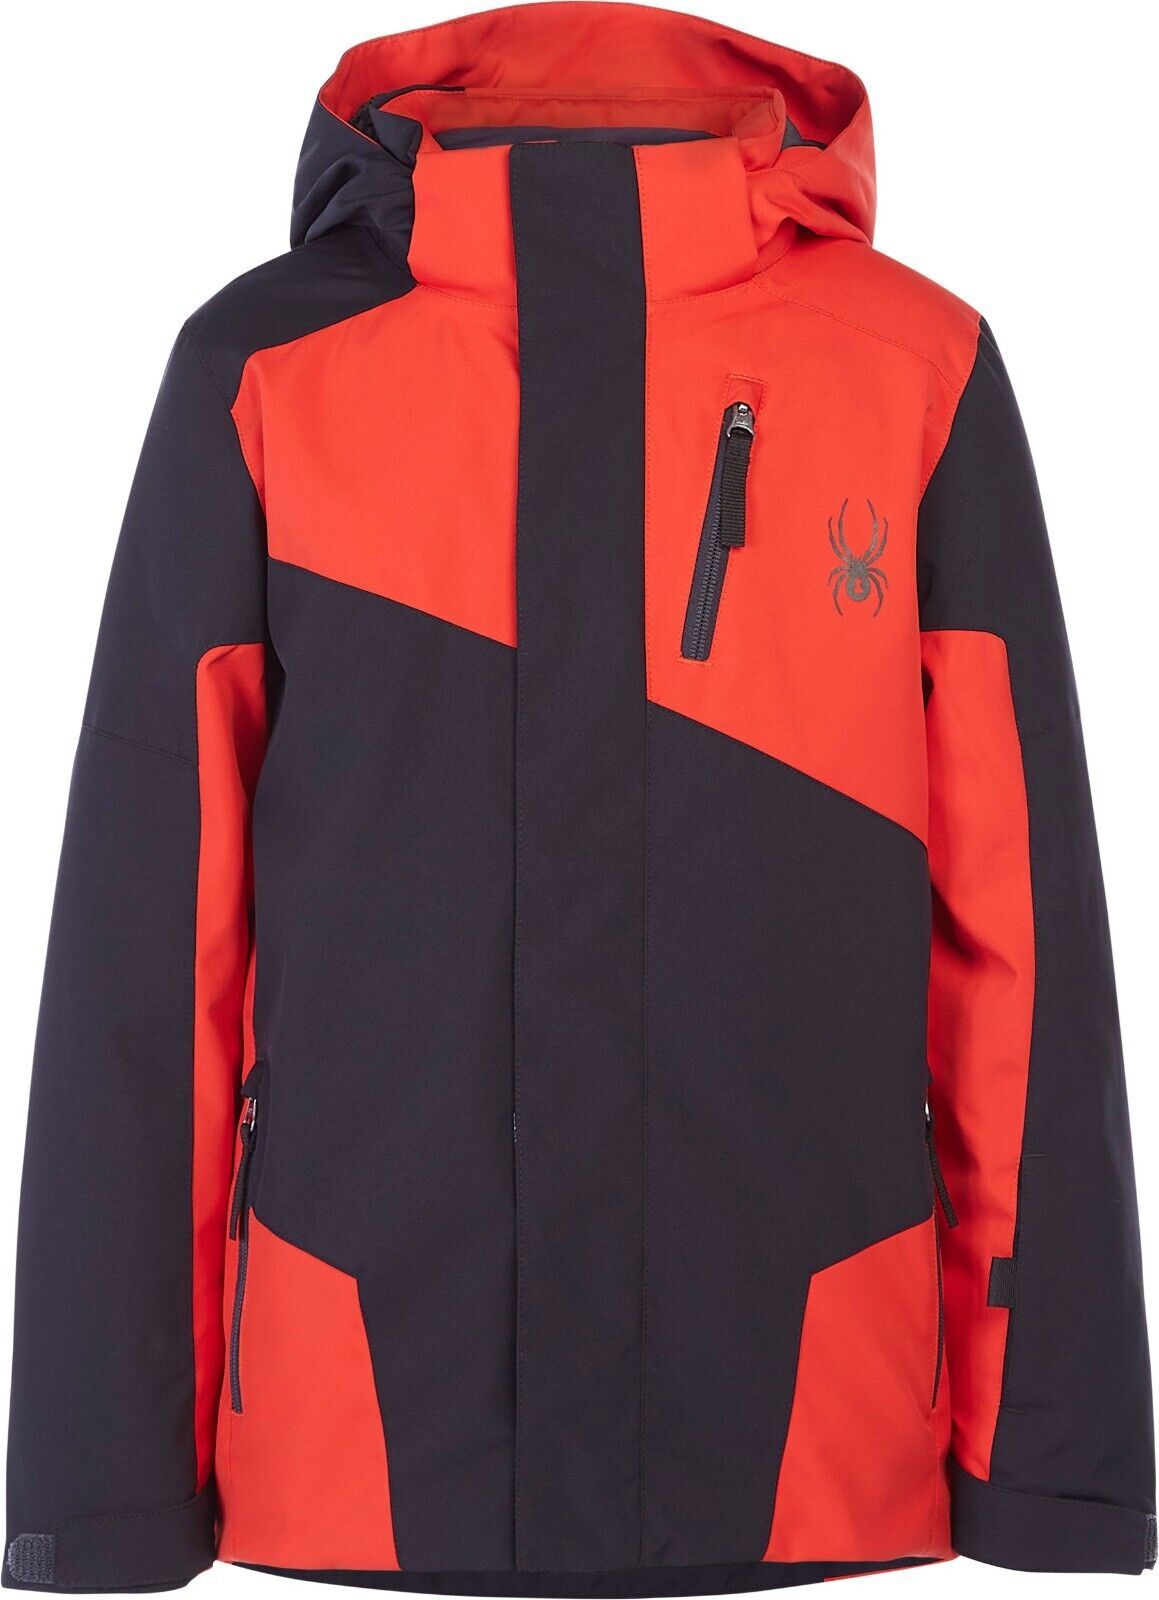 Spyder Boys Turner Jacket, Ski Snowboard Insulated Winter jacket Size S, NWT - $89.77